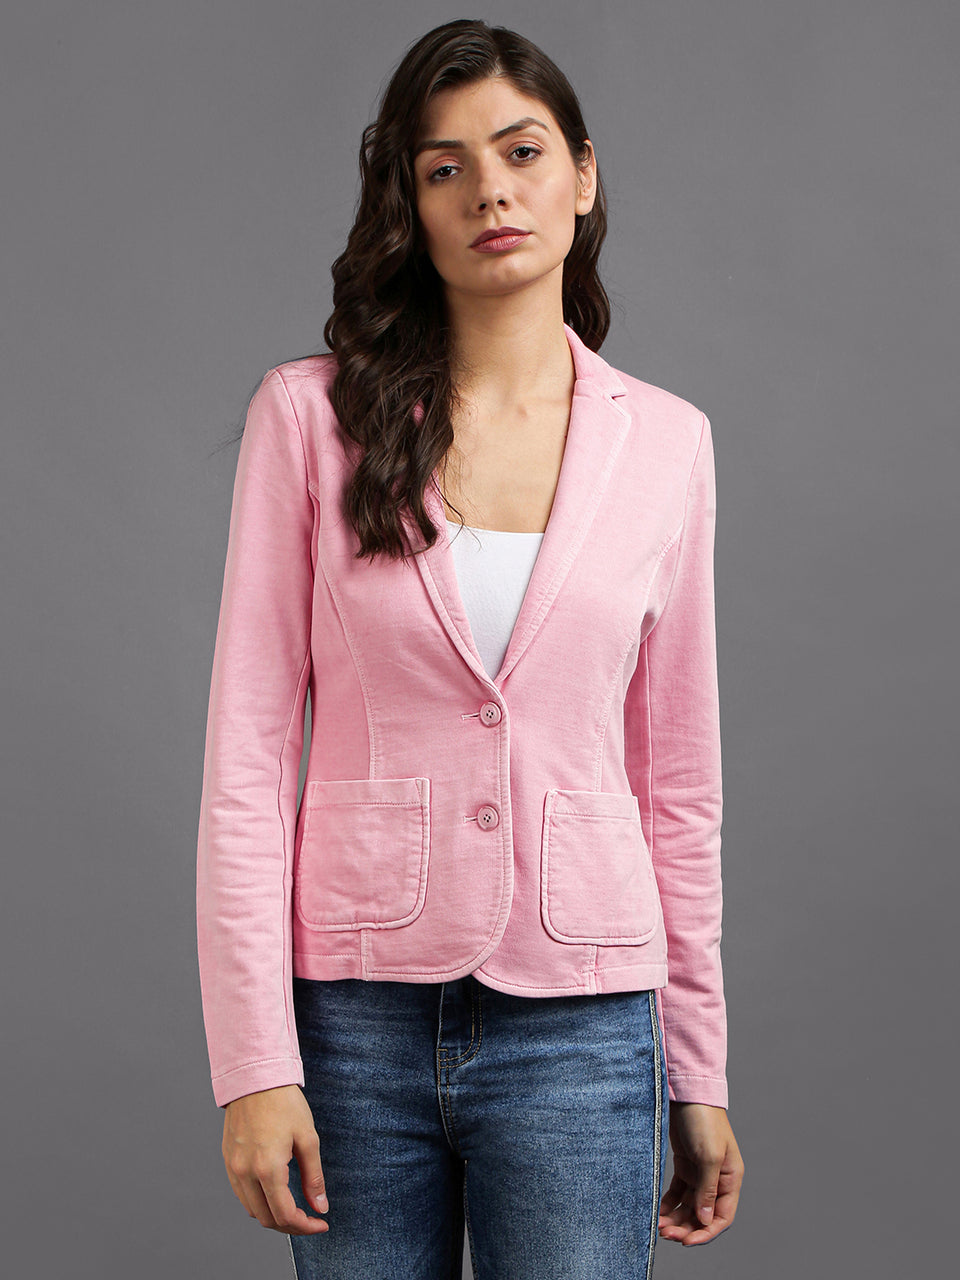 MONTE CARLO Full Sleeve Solid Women Jacket - Buy MONTE CARLO Full Sleeve  Solid Women Jacket Online at Best Prices in India | Flipkart.com